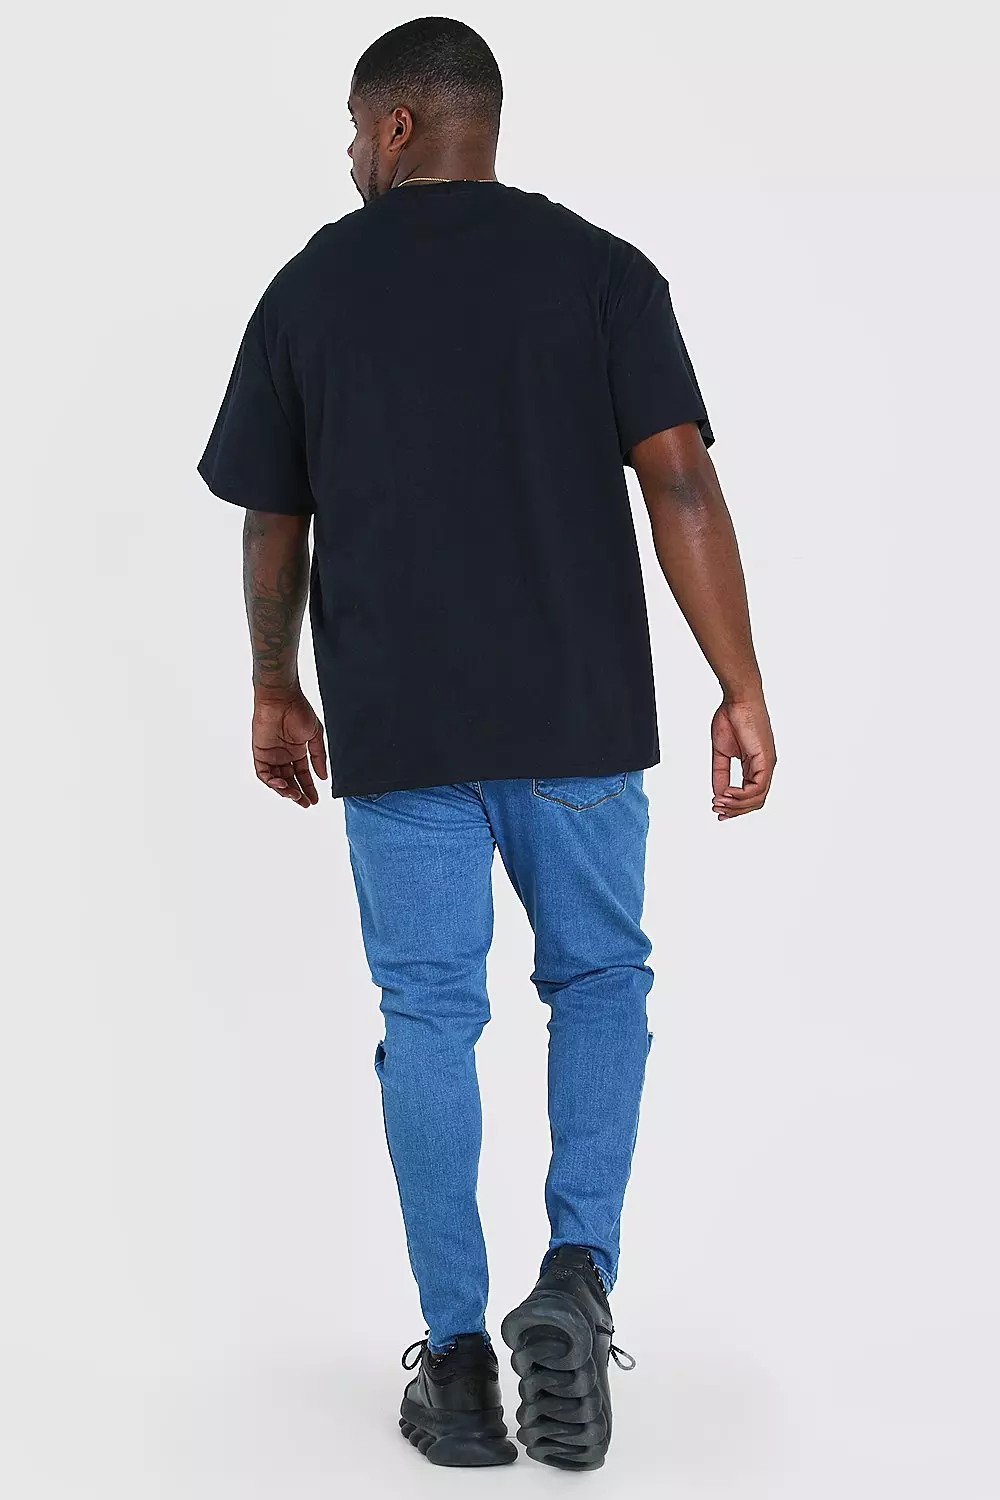 Mens Plus Size Nasa Sleeve Print License T-Shirt - Black